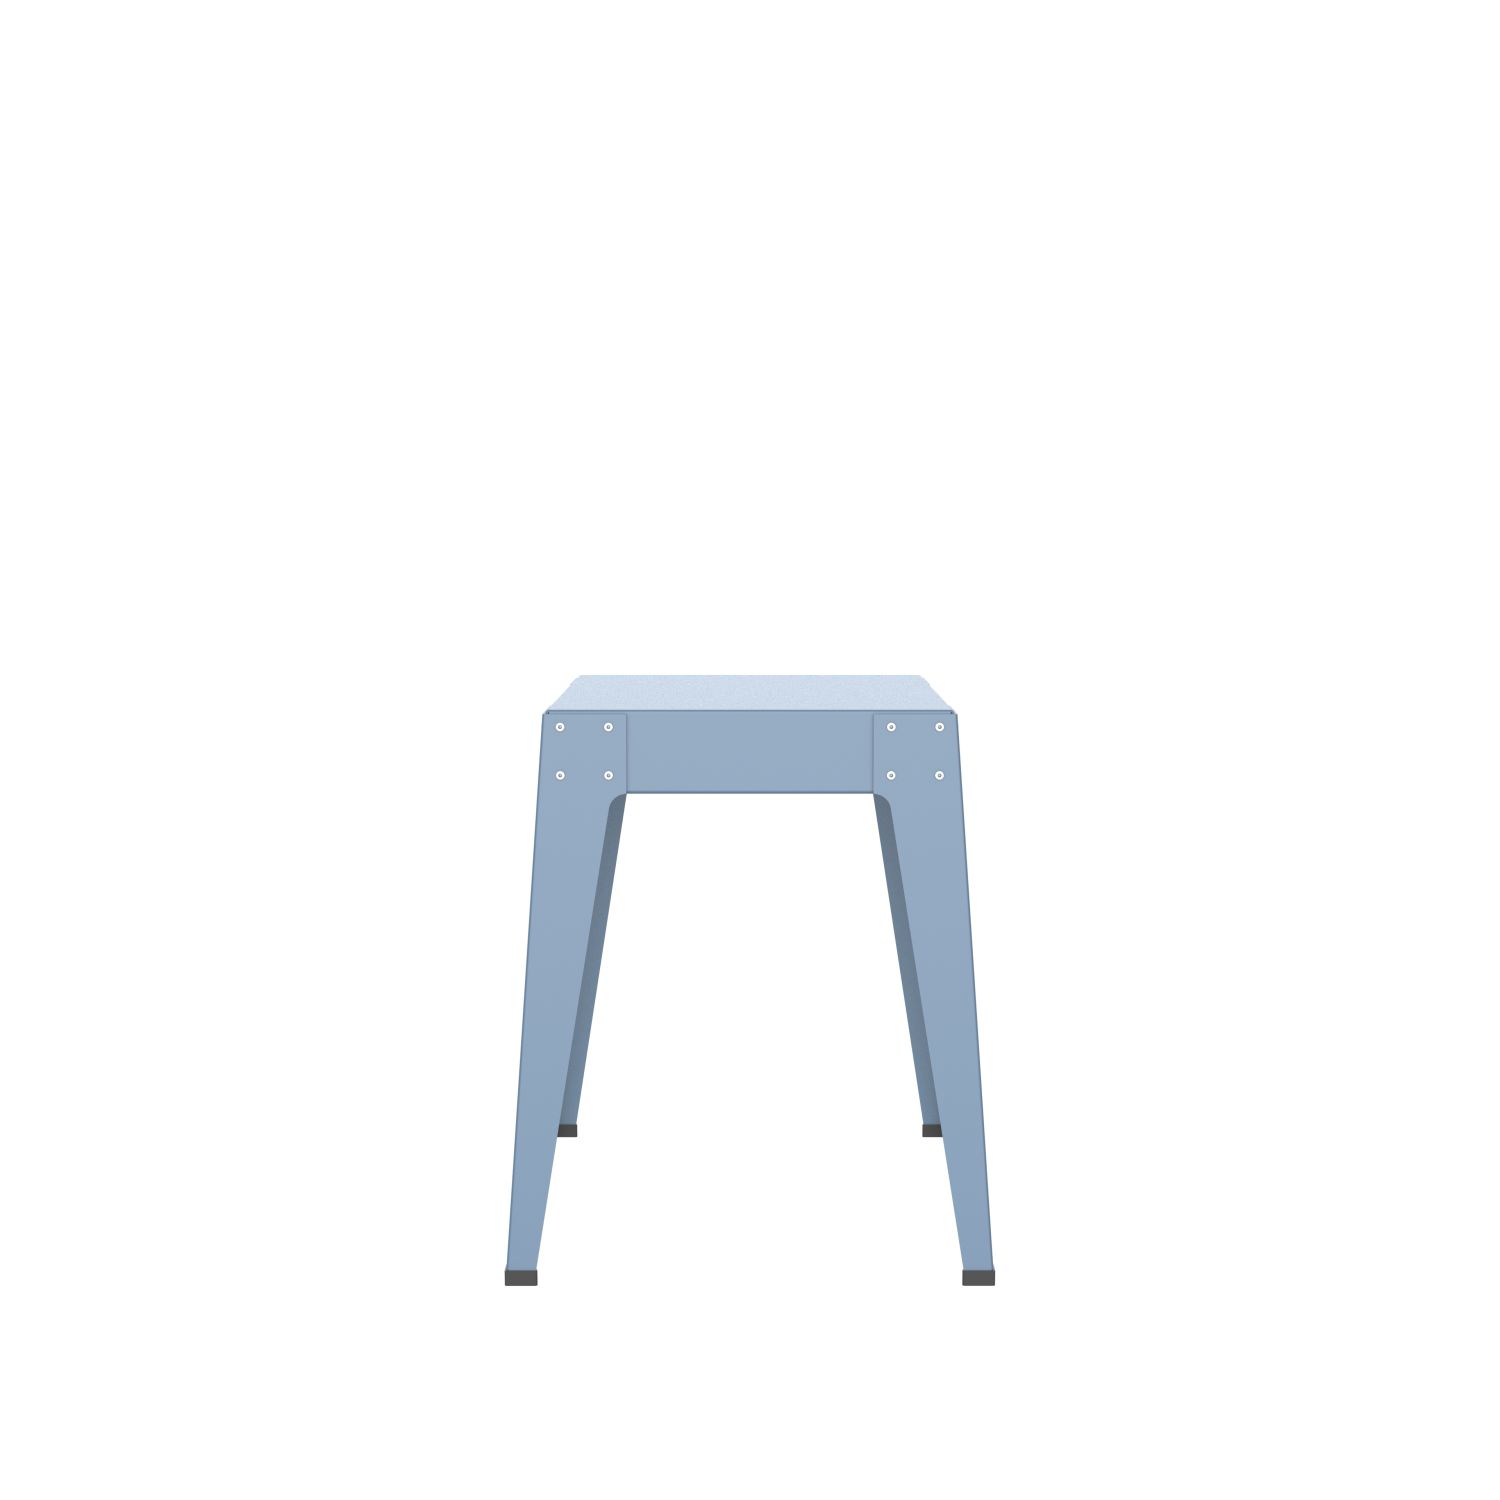 lensvelt piet hein eek aluminium series stool pigeon blue ral5014 hard leg ends